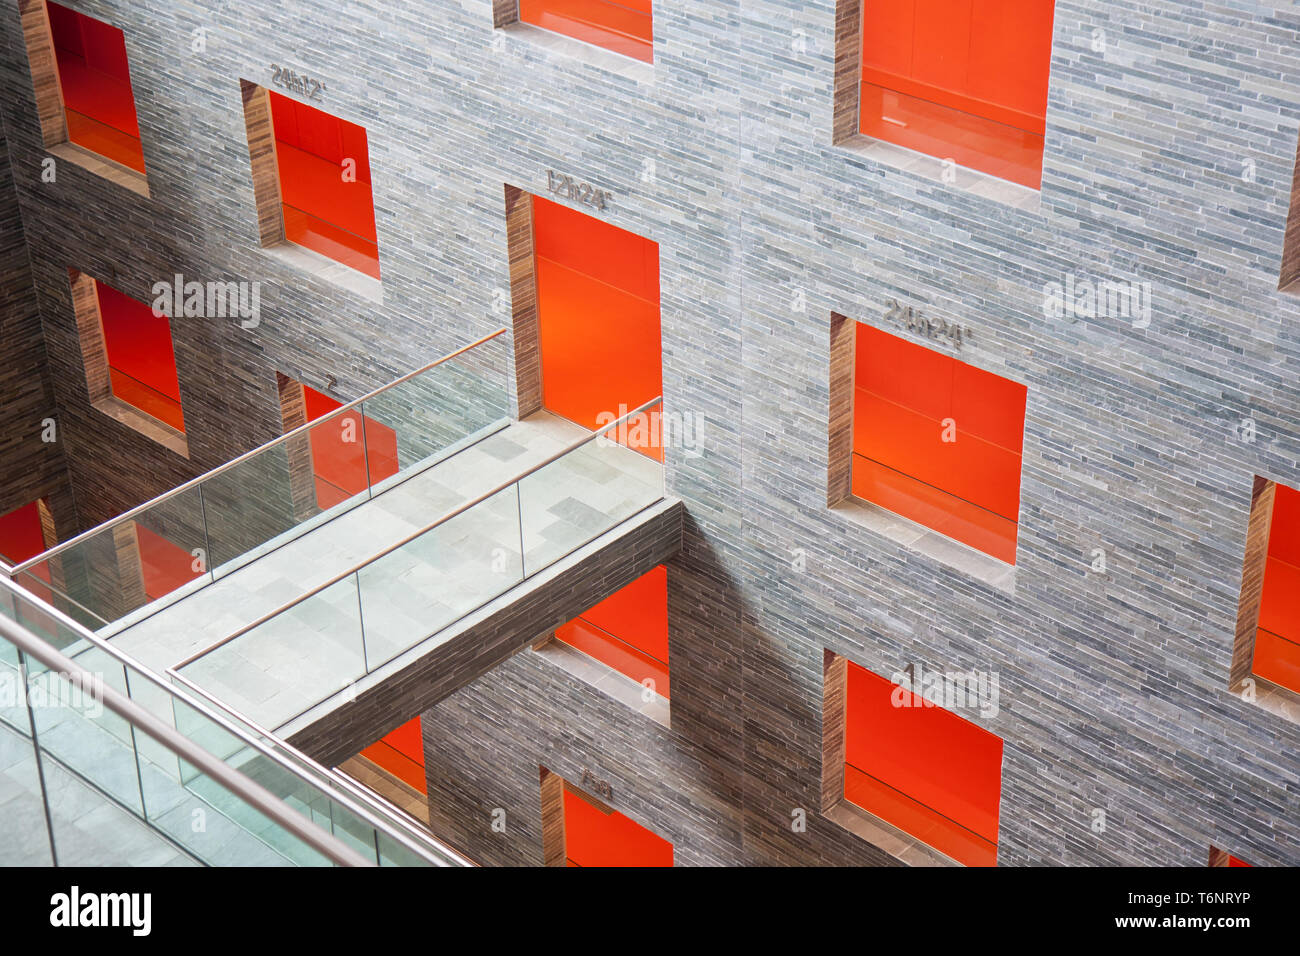 Futuristic interior with big orange rooms in a modern building Stock Photo